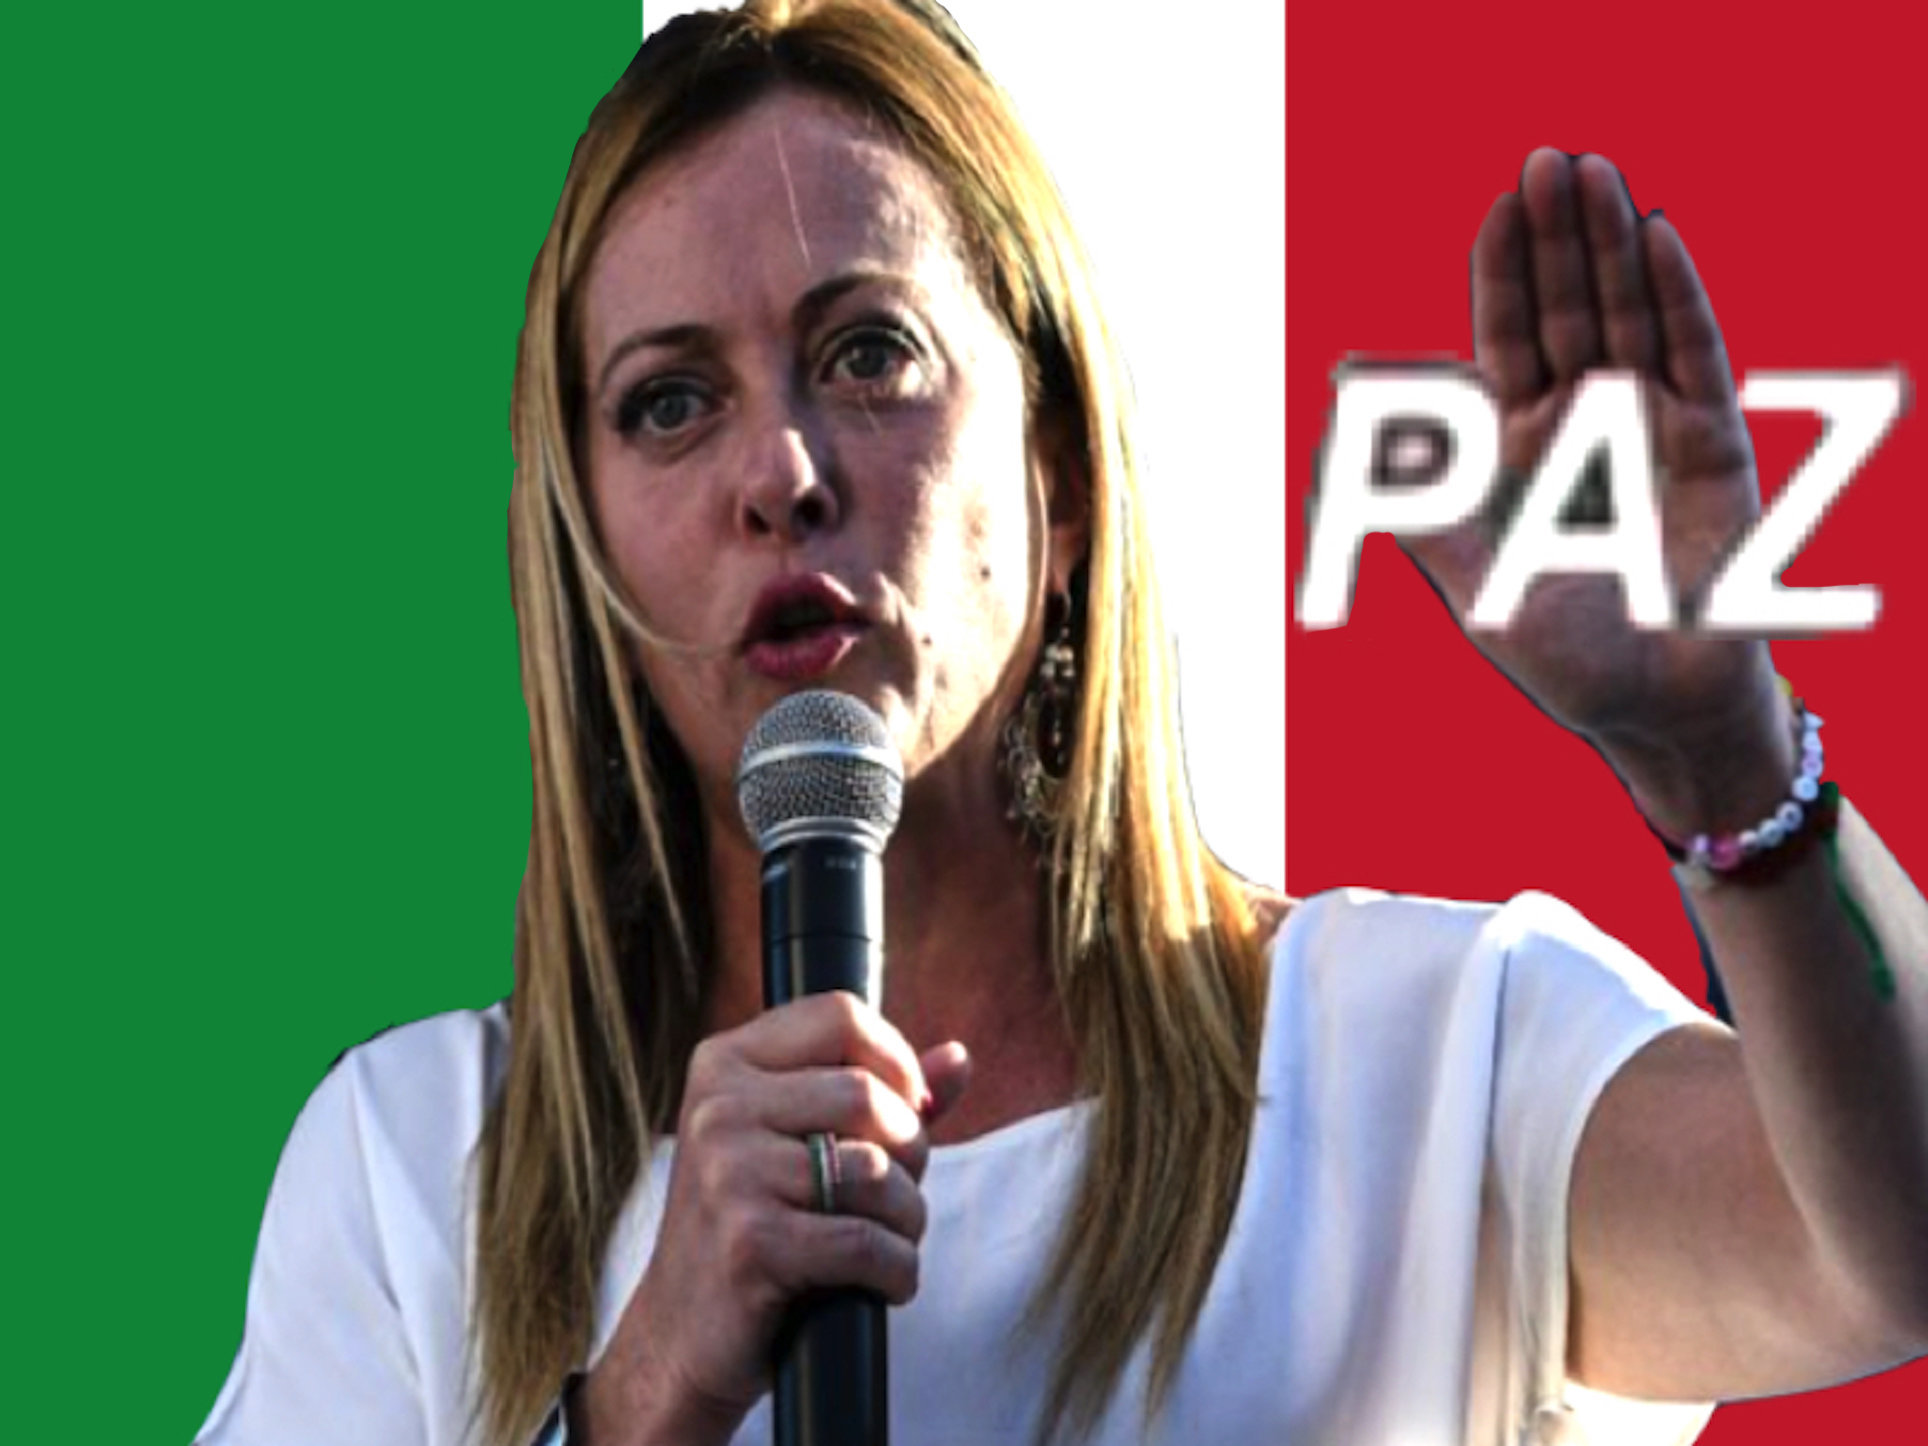 giorgia meloni paz italie fascisme facho extreme droite immigration famille chretien femme italienne chretienne europe